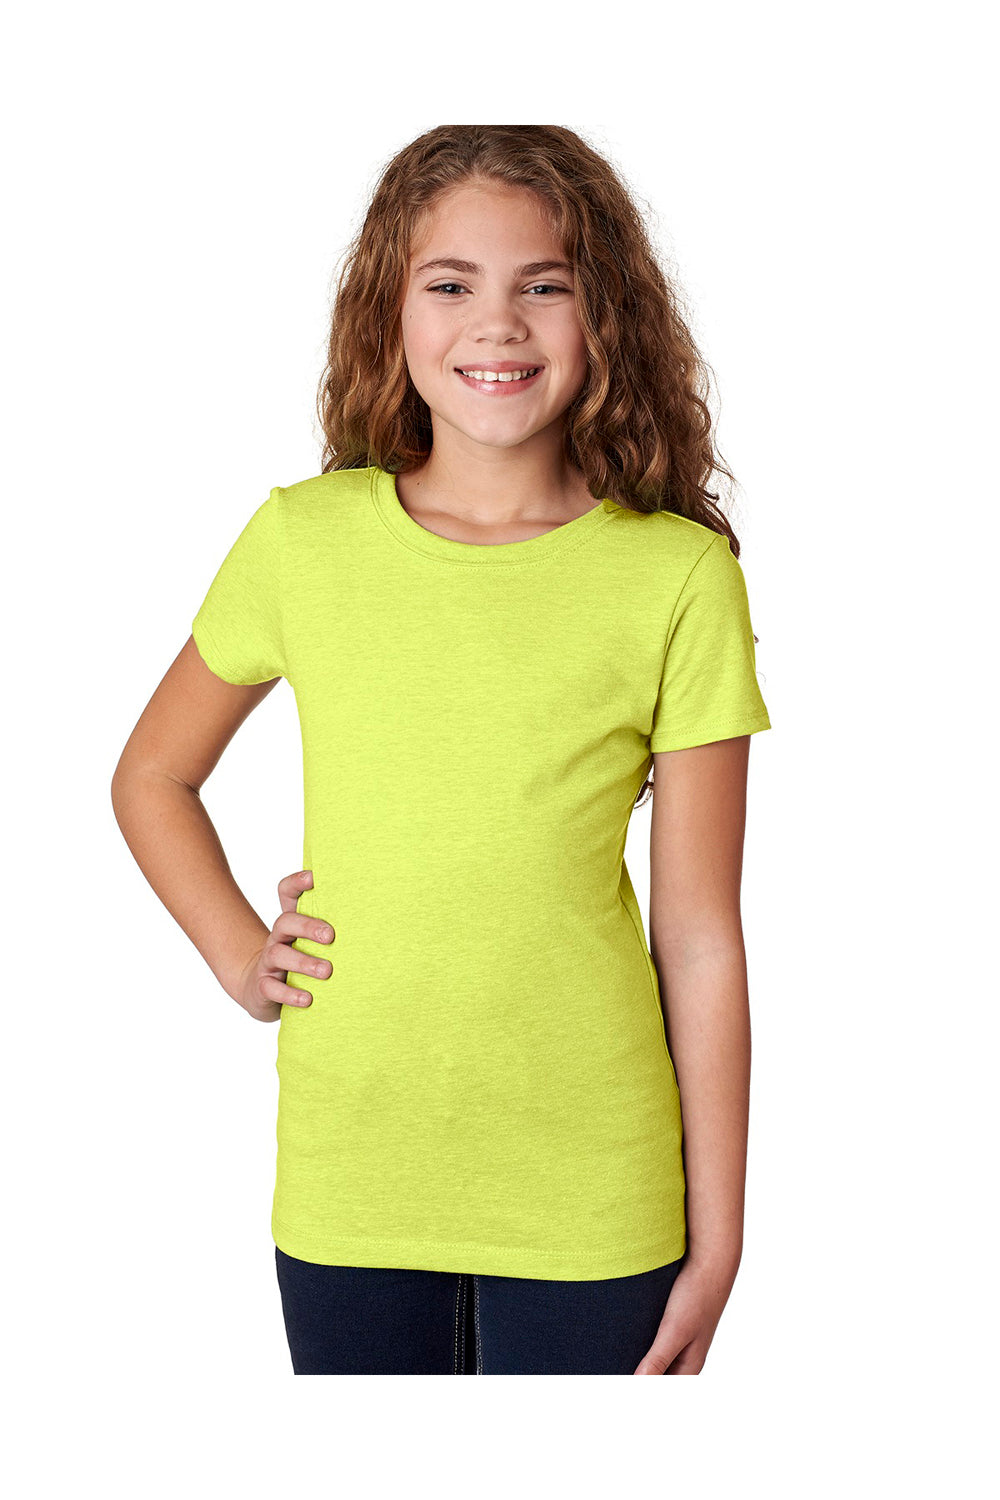 Next Level 3712 Youth Princess CVC Jersey Short Sleeve Crewneck T-Shirt Neon Yellow Front